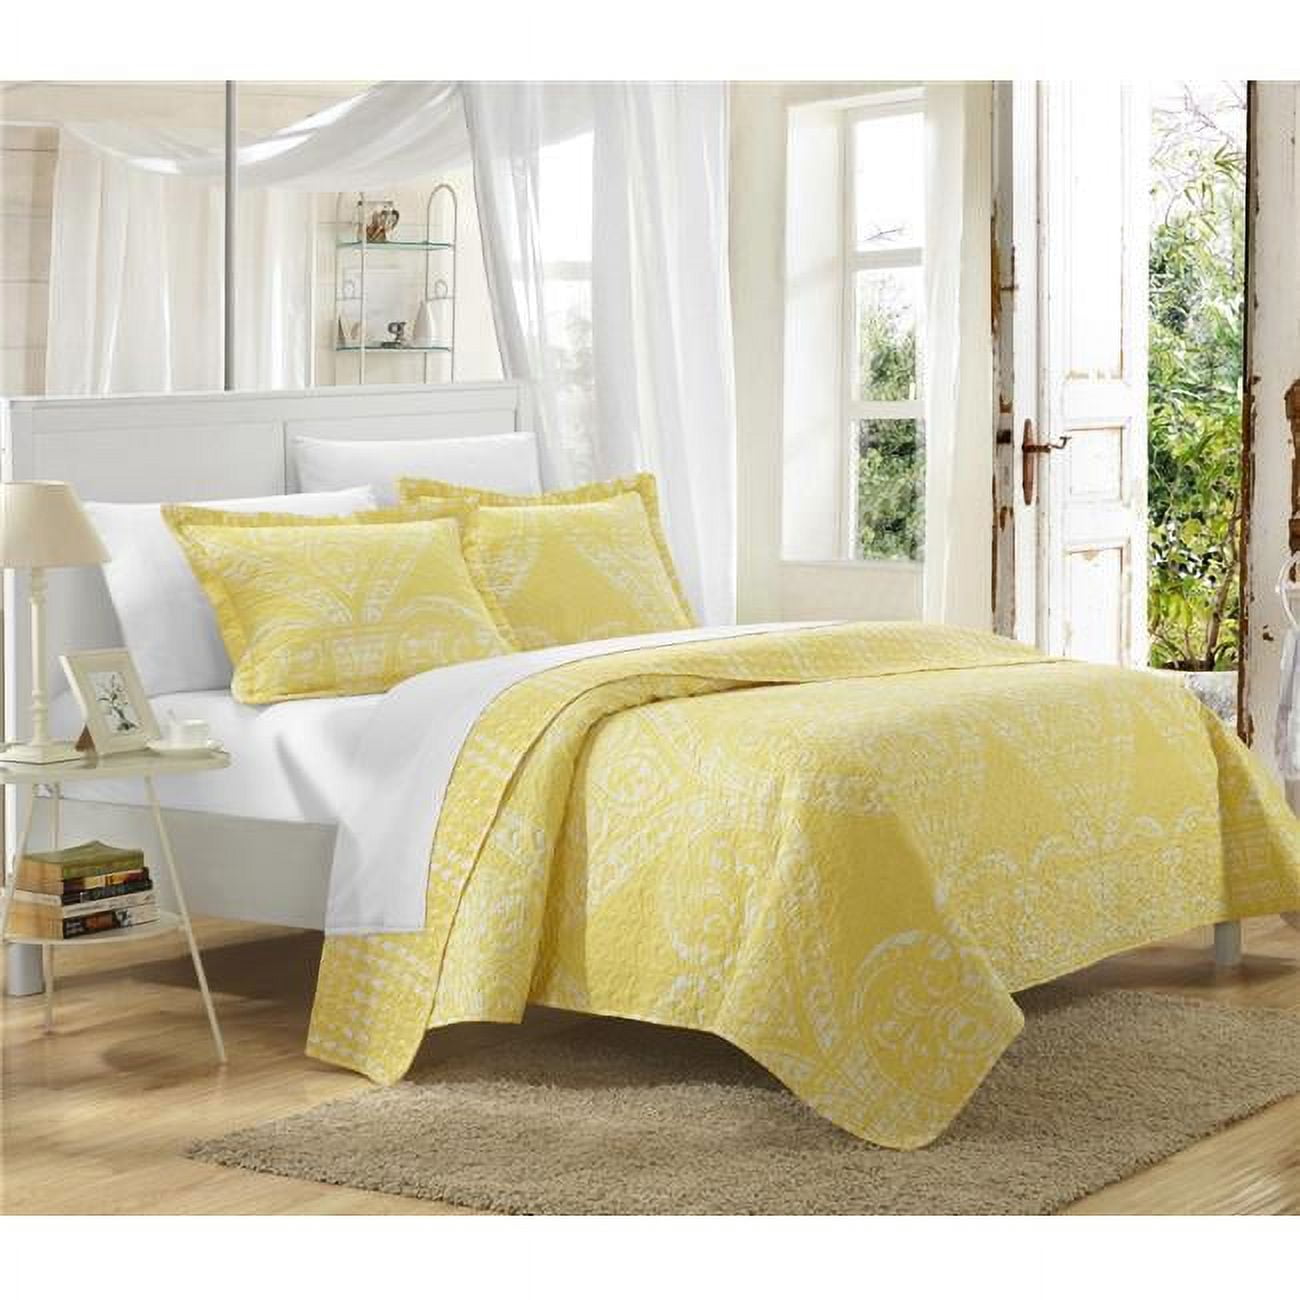 Qs3422-bib-us 7 Piece Pastola Reversible Printed Quilt Queen Quilt Set, Yellow With Sheet Set